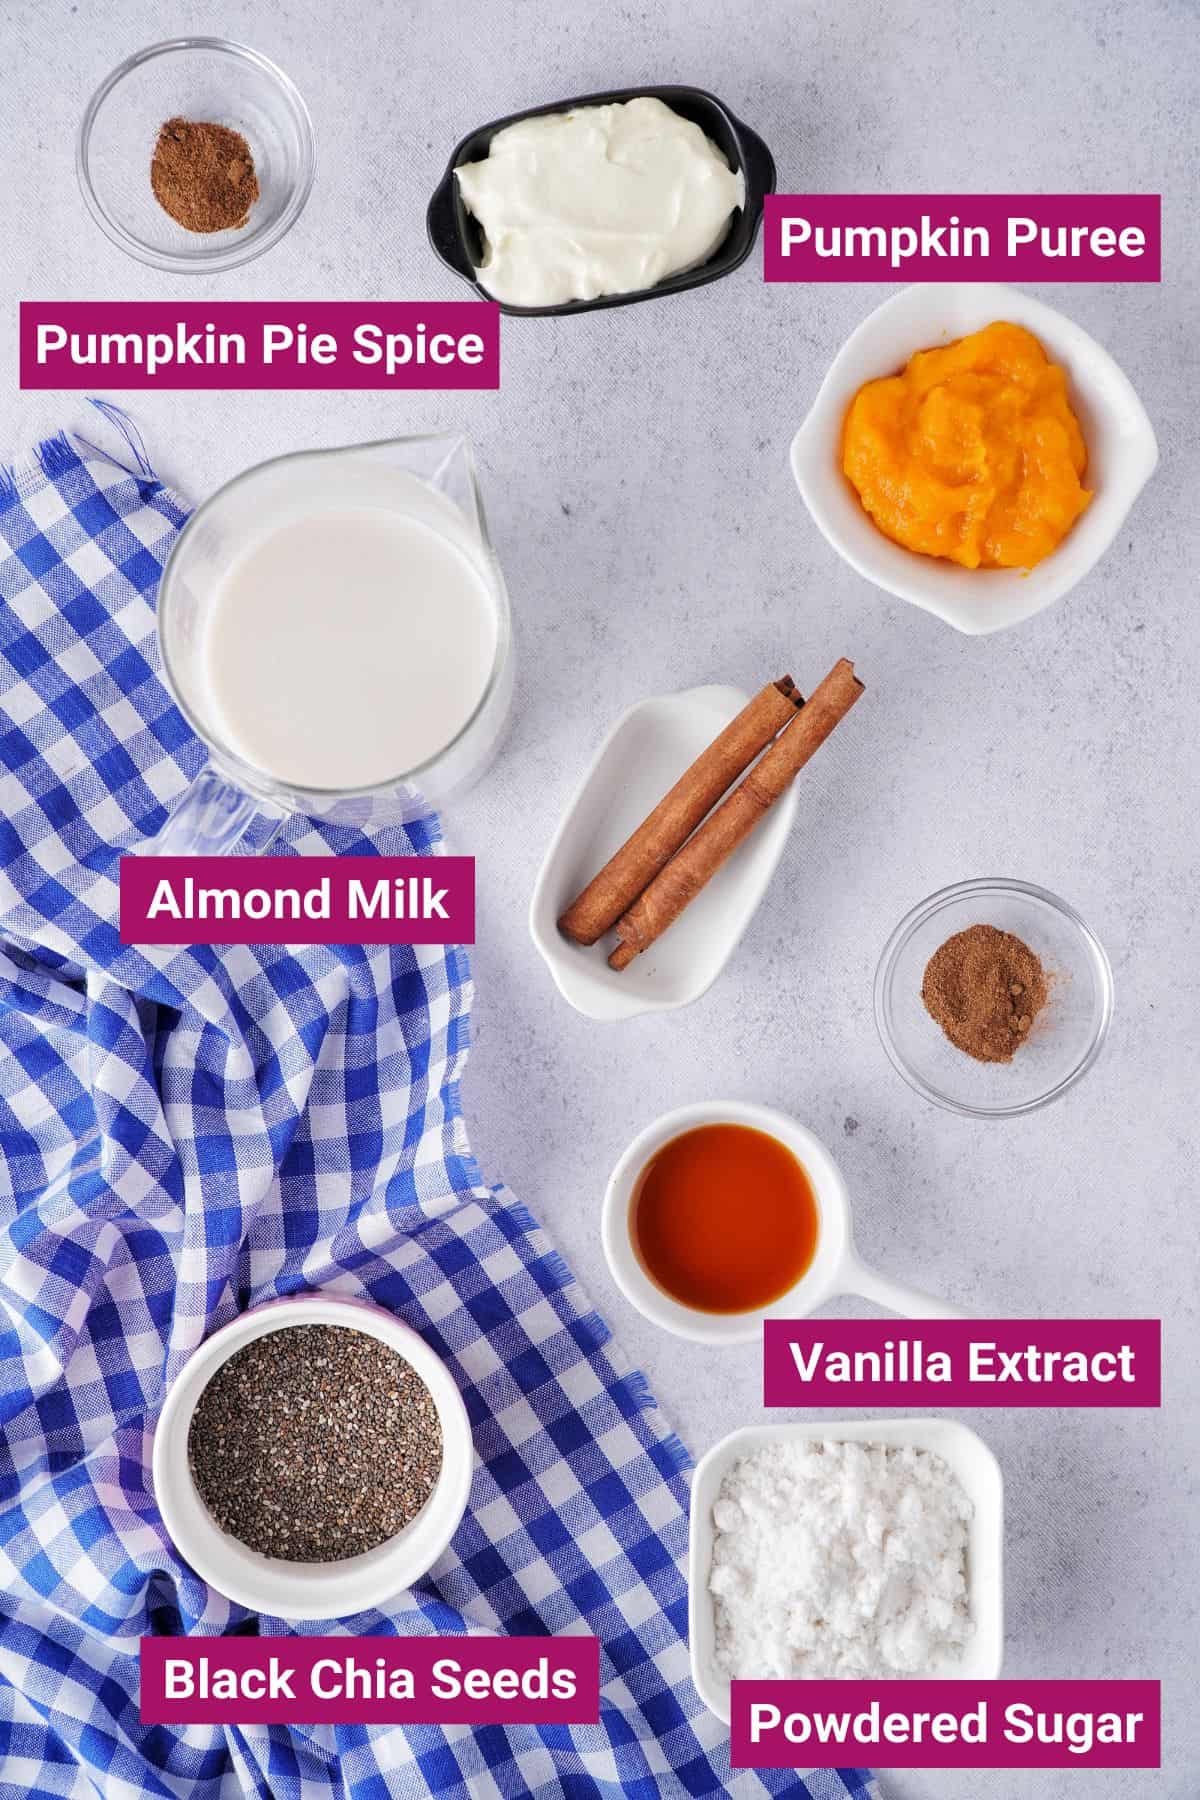 ingredients needed to make keto pumpkin chia pudding like pumpkin pie spice, pumpkin puree, almond milk, vanilla extract, powdered sweetener, and black chia seeds in separate bowls.